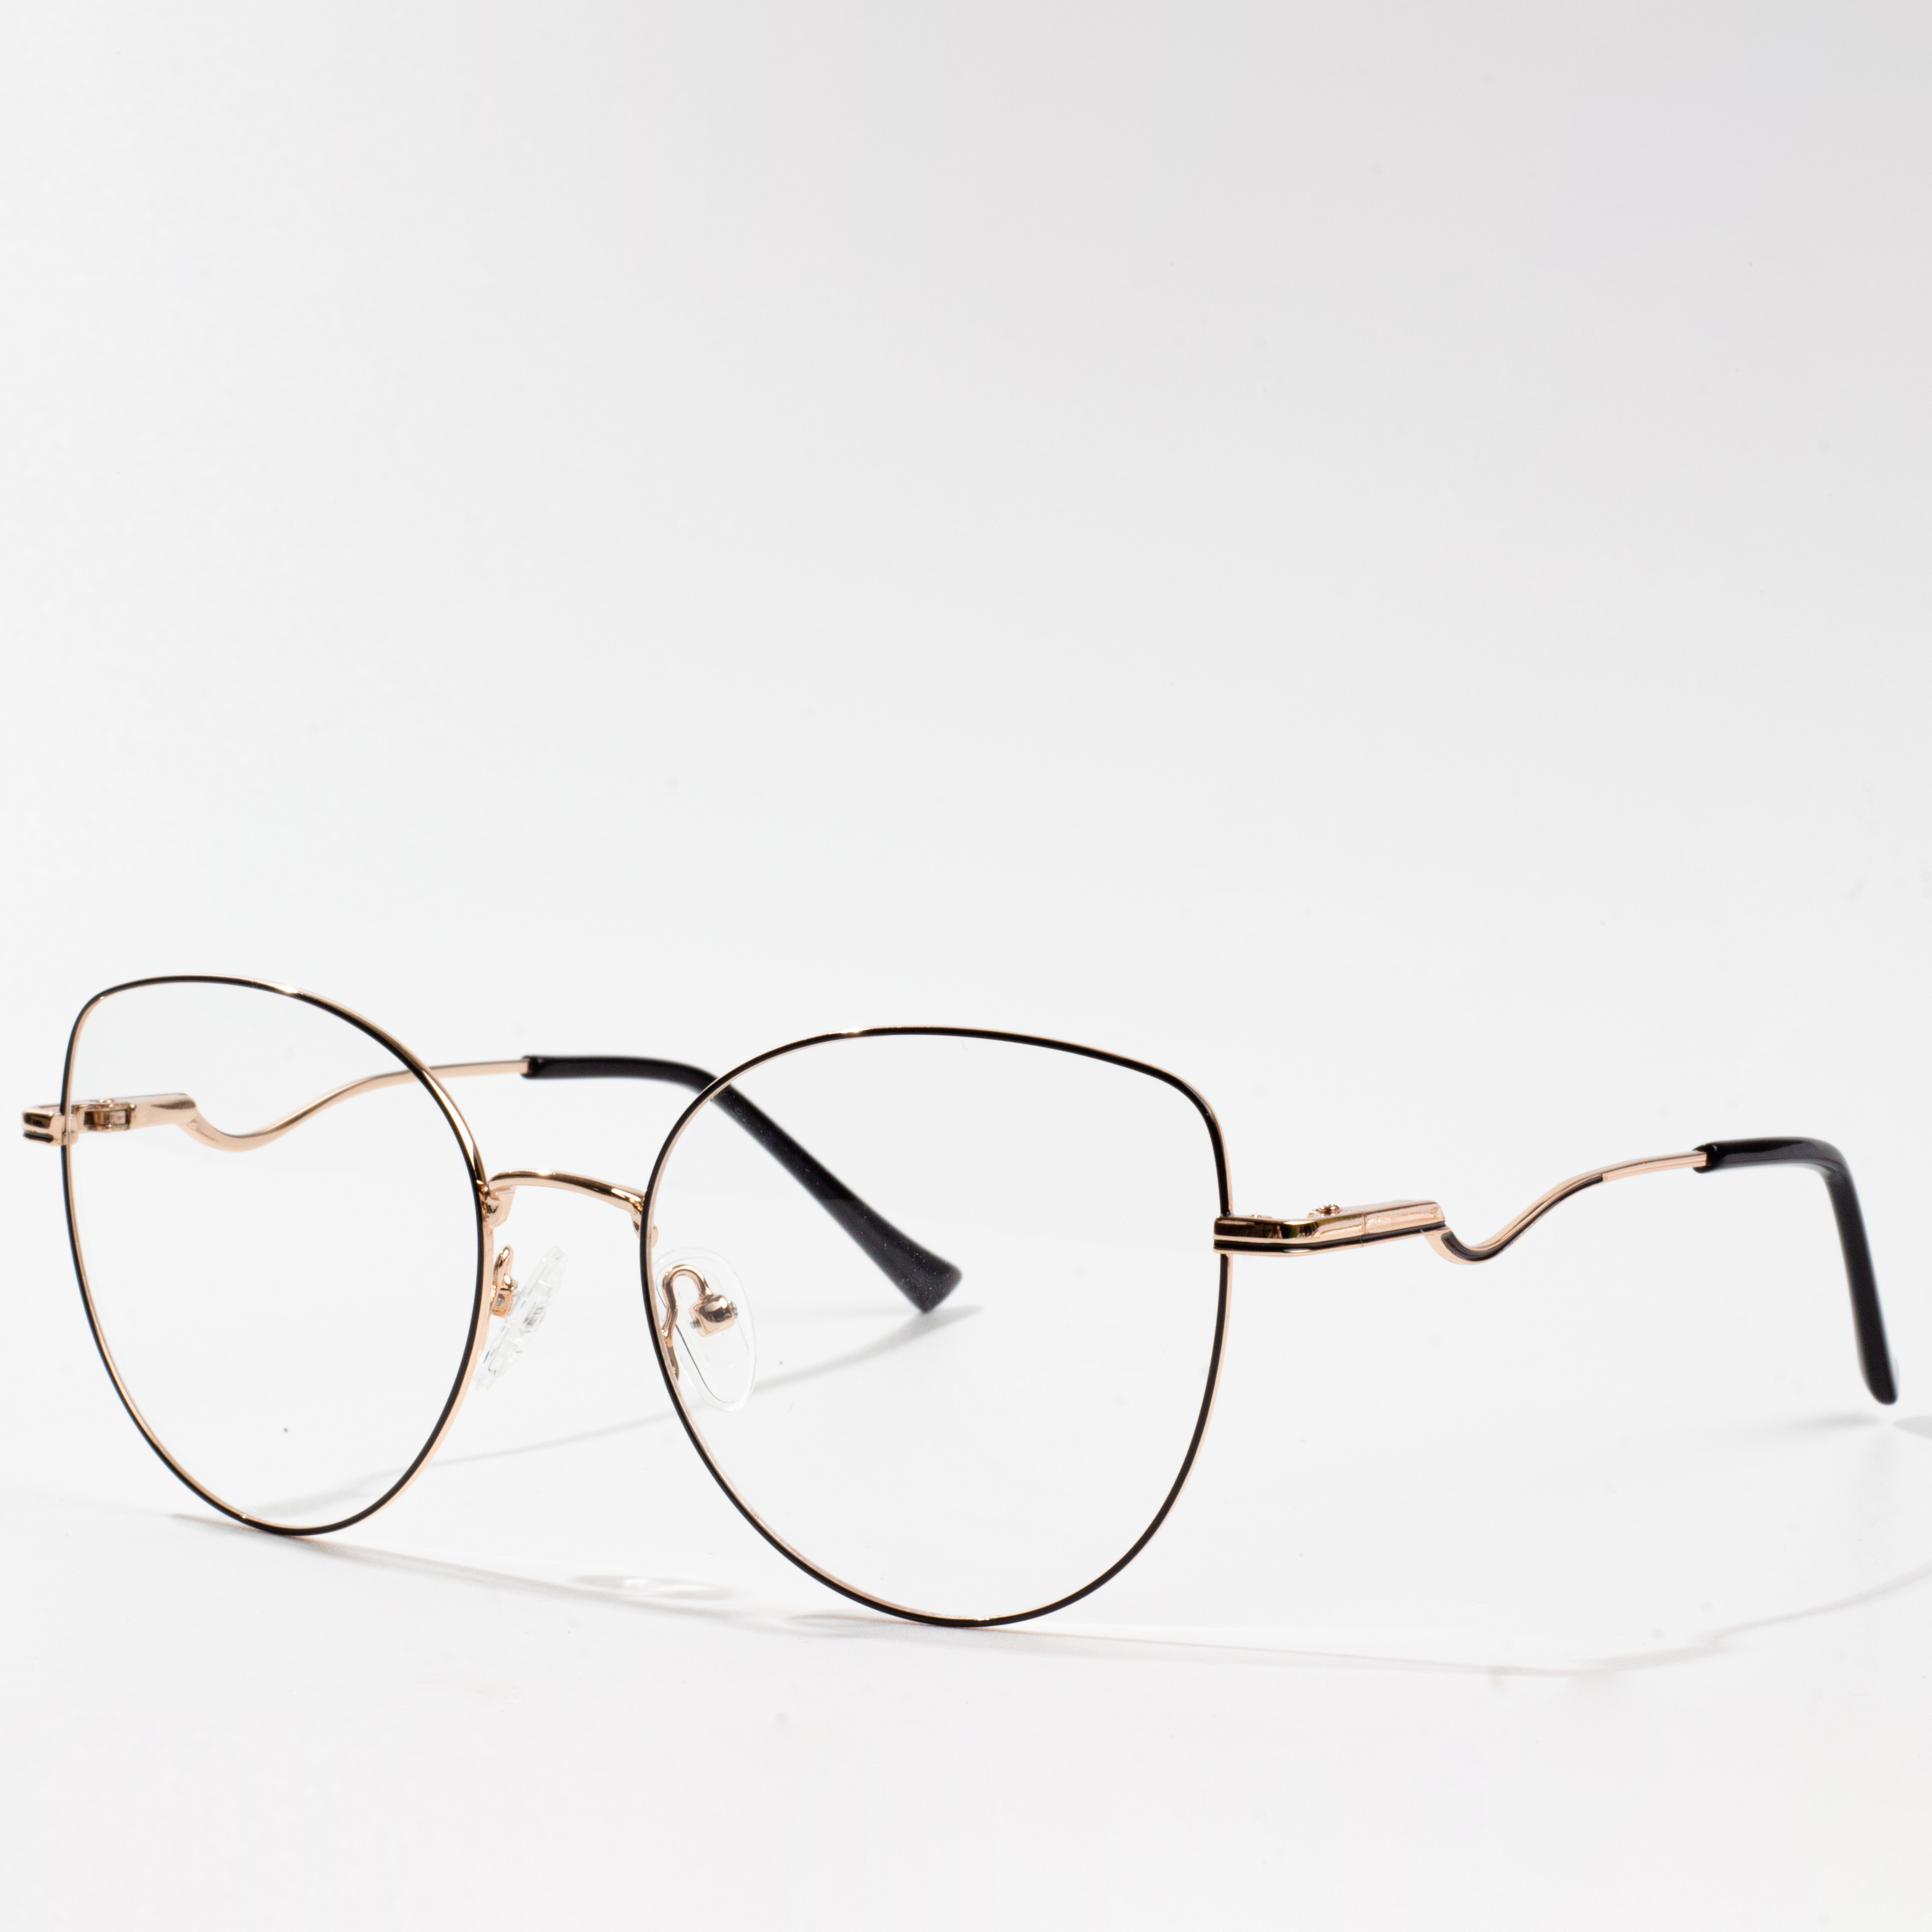 saka eyeglass frames